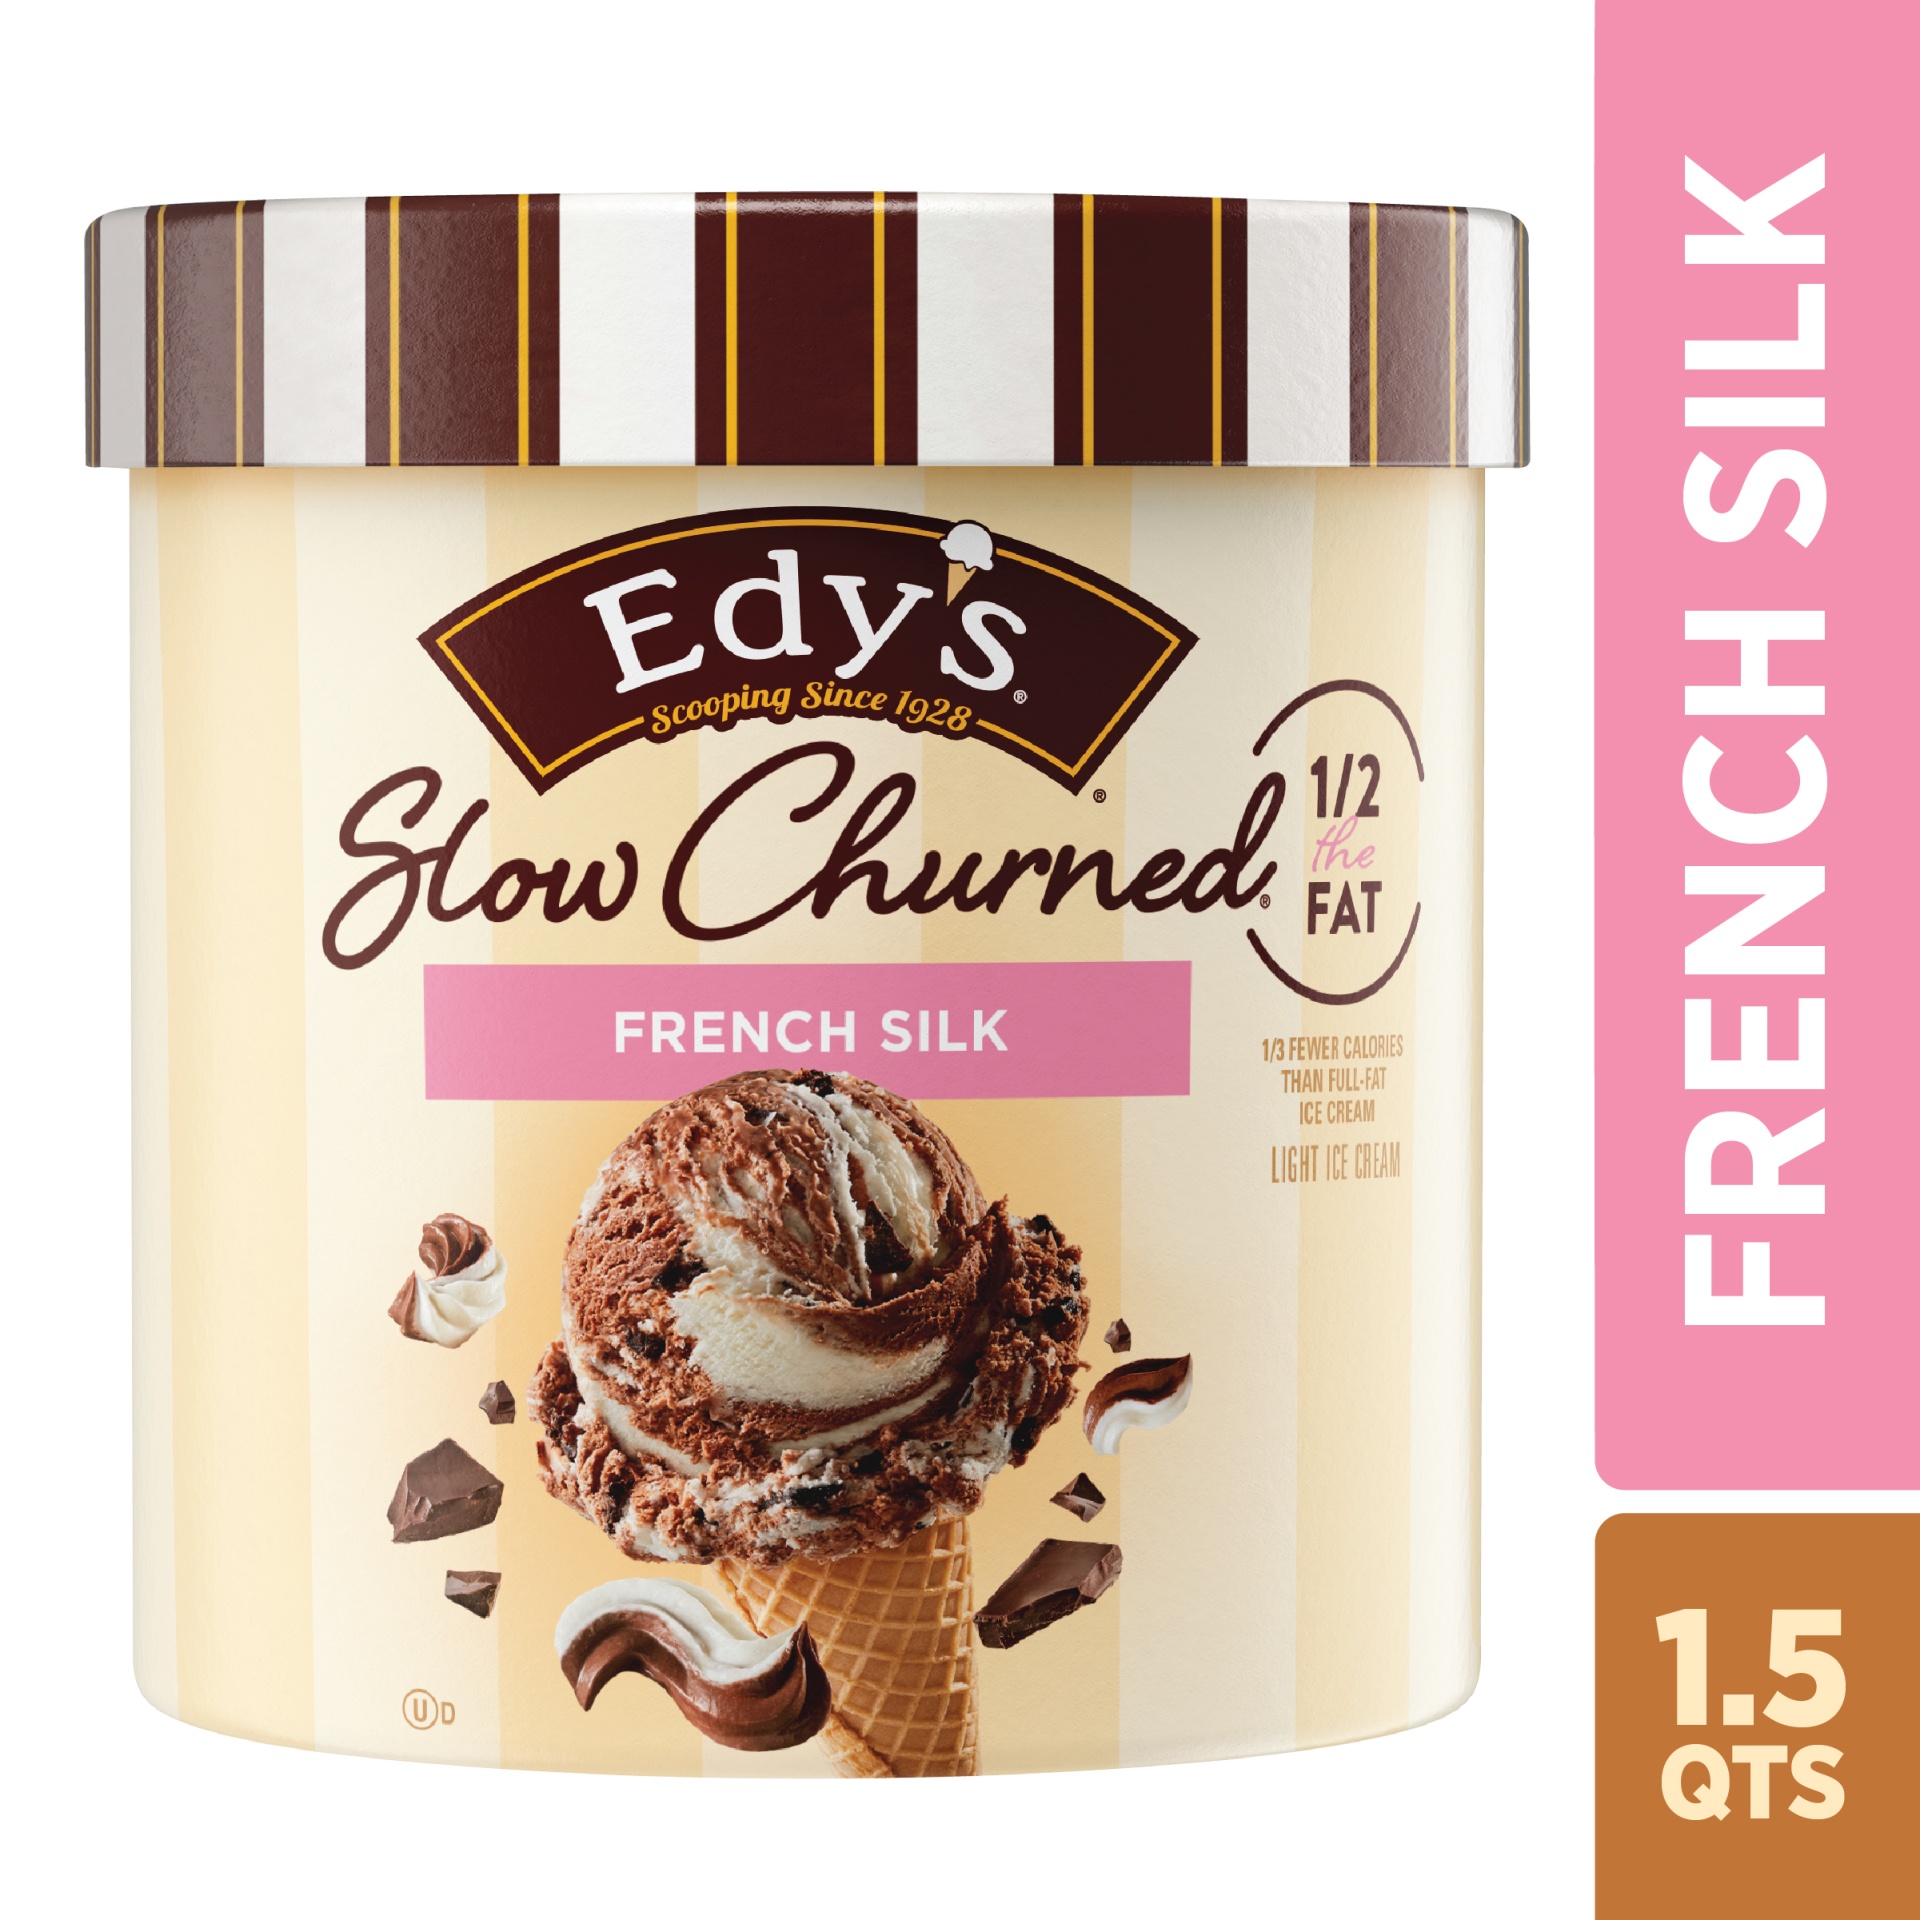 slide 1 of 7, Edy's Slow Churned French Silk Light Ice Cream, 1.5 qt